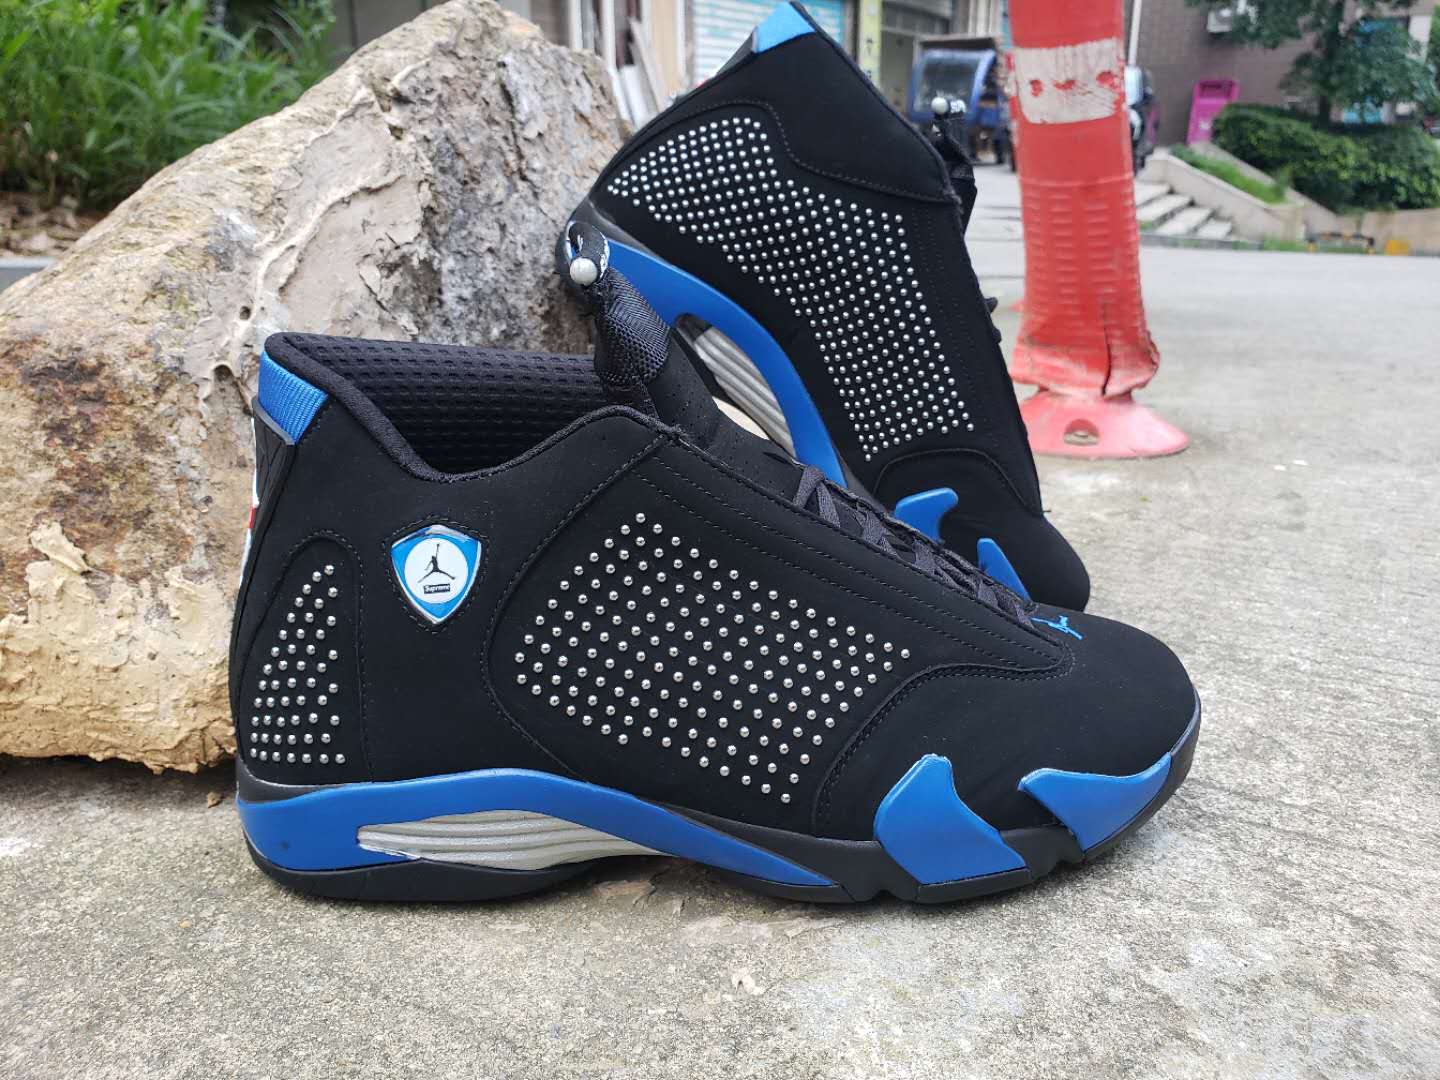 Cheap 2019 Air Jordan Retro 14 X Supreme Sneakers For Men in 208288, cheap Jordan14, only $65!